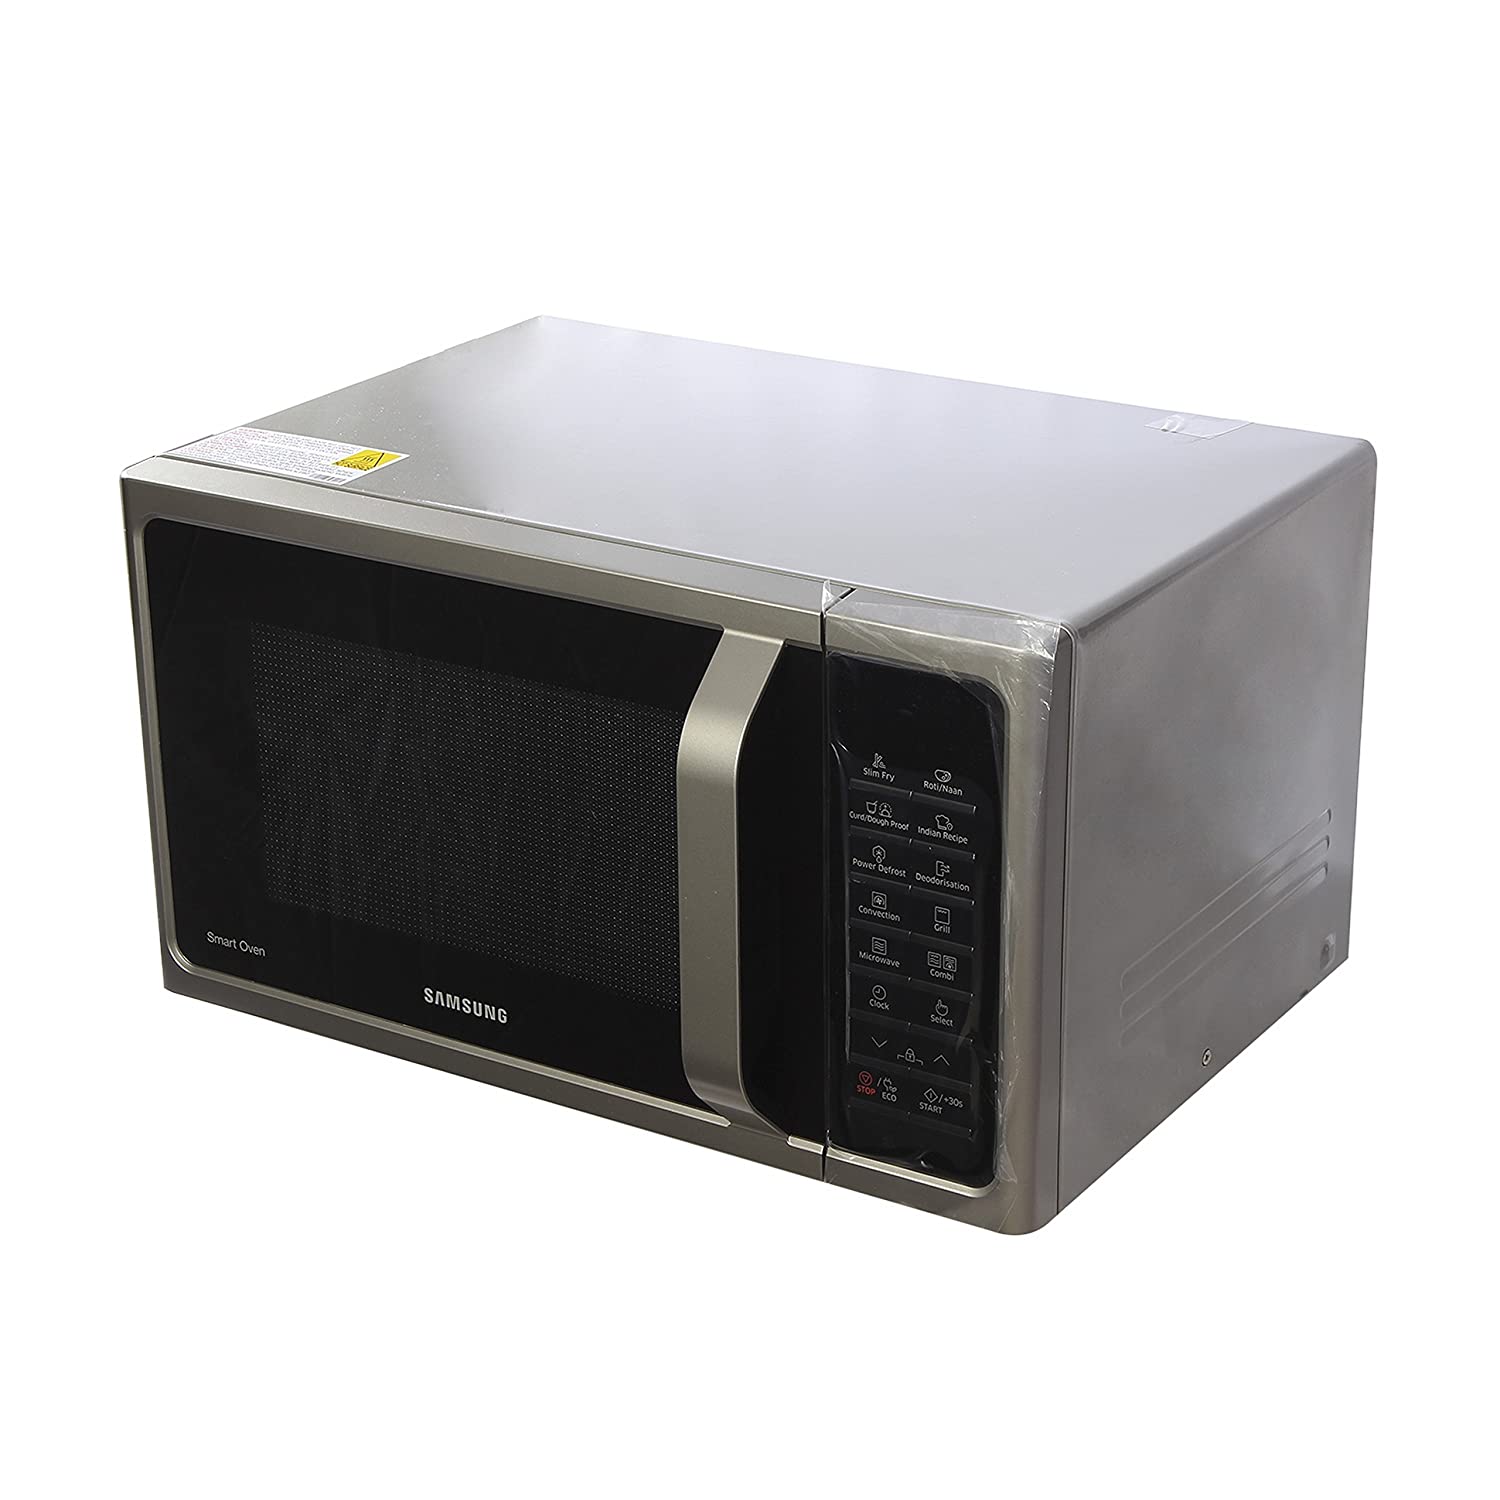 Samsung 28 L Convection Microwave Oven (MC28H5025VS/TL, Silver) - Mahajan Electronics Online